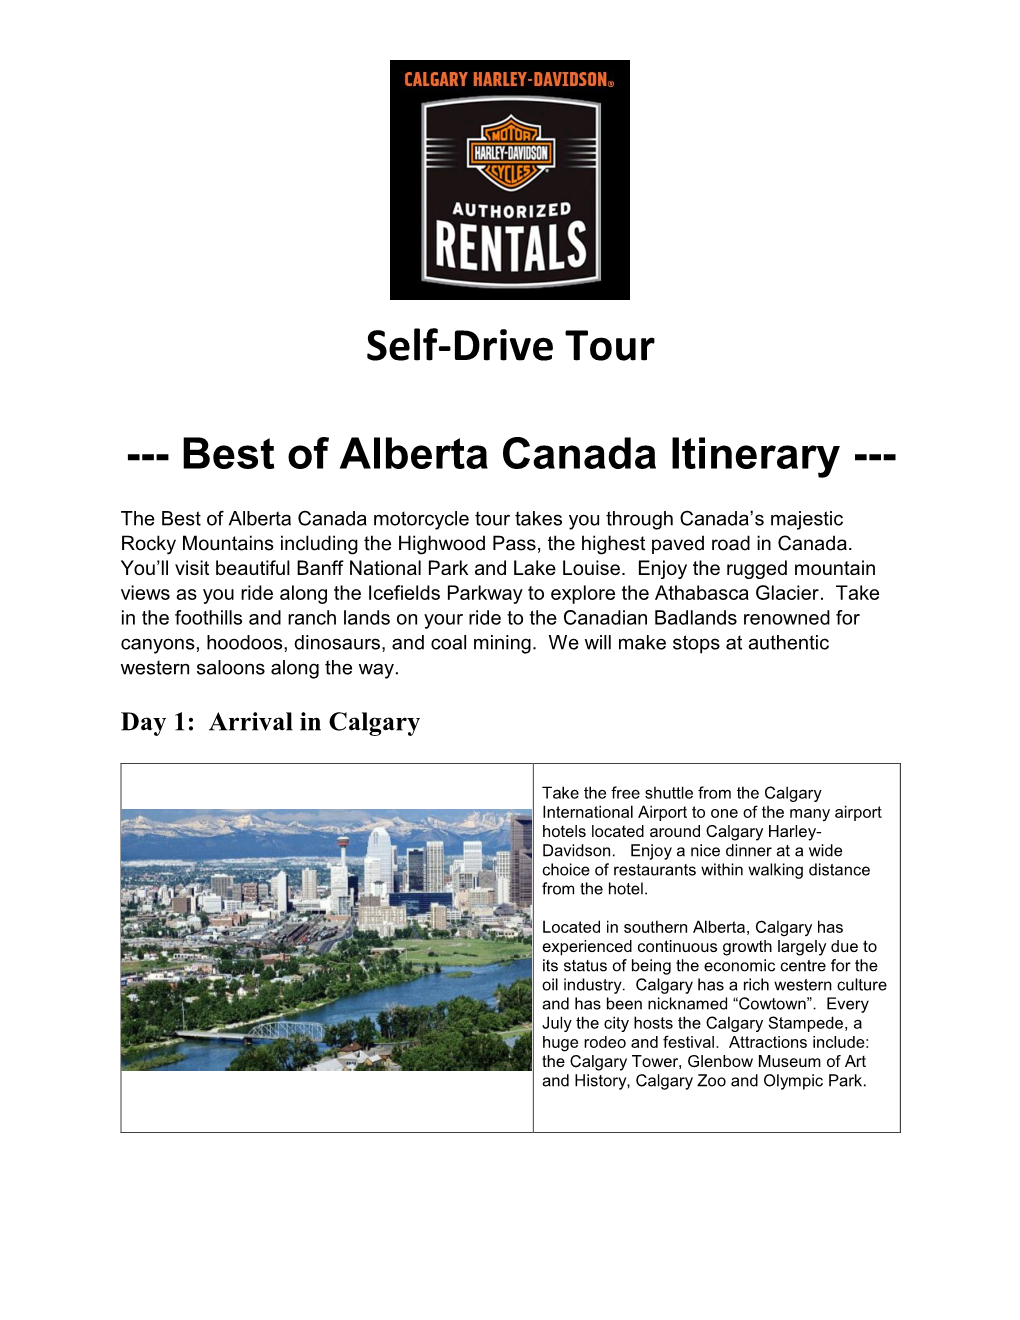 Best of Alberta Canada Itinerary (Pdf)